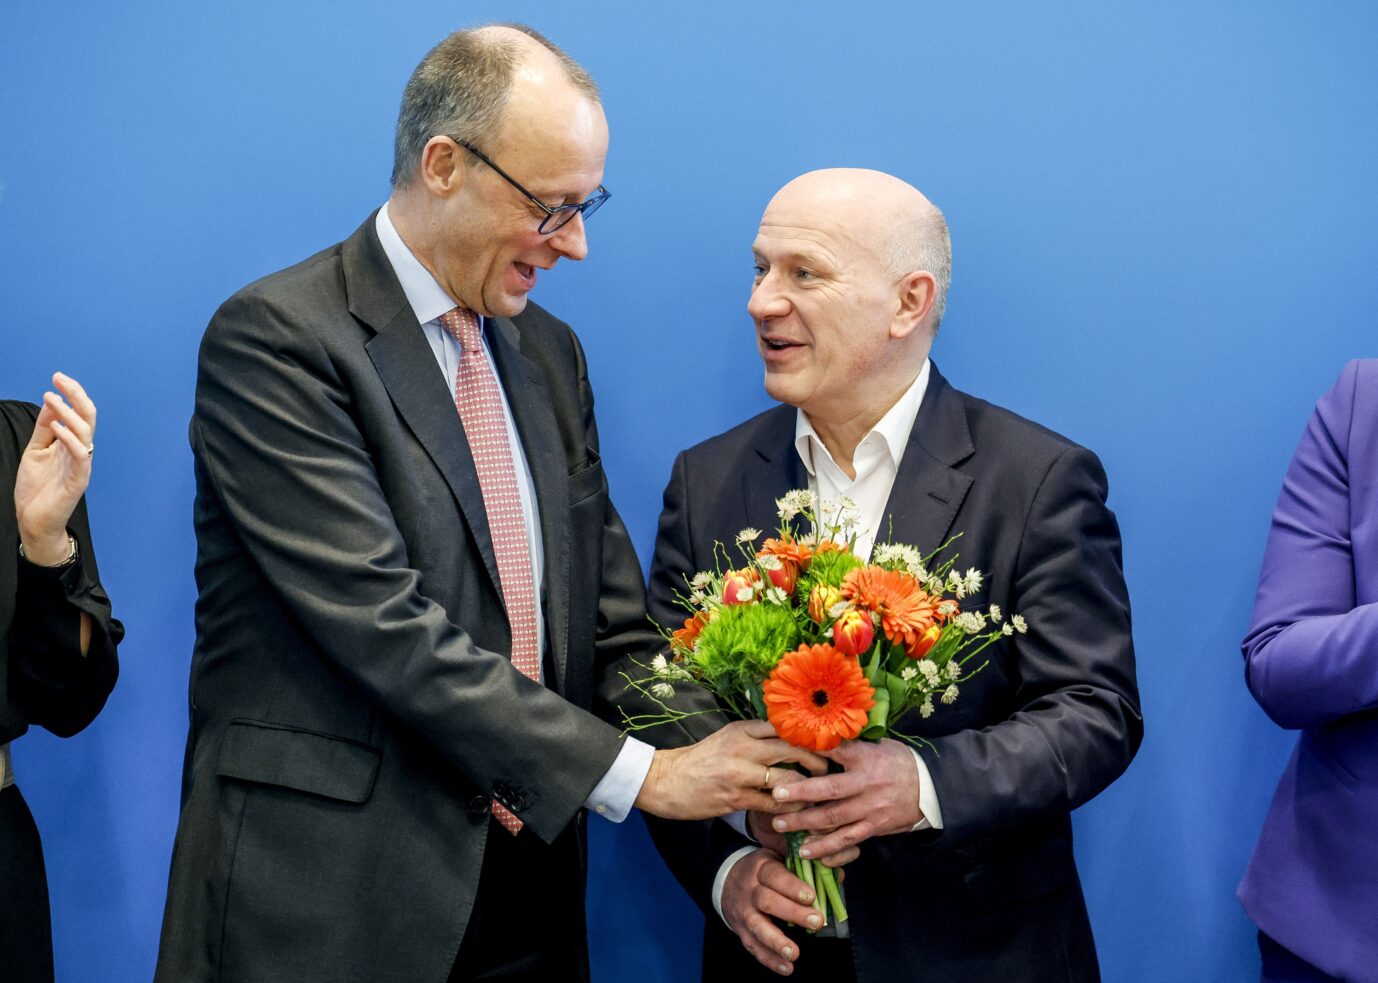 Germany's CDU leader Friedrich Merz and Berlin's CDU leader Kai Wegner